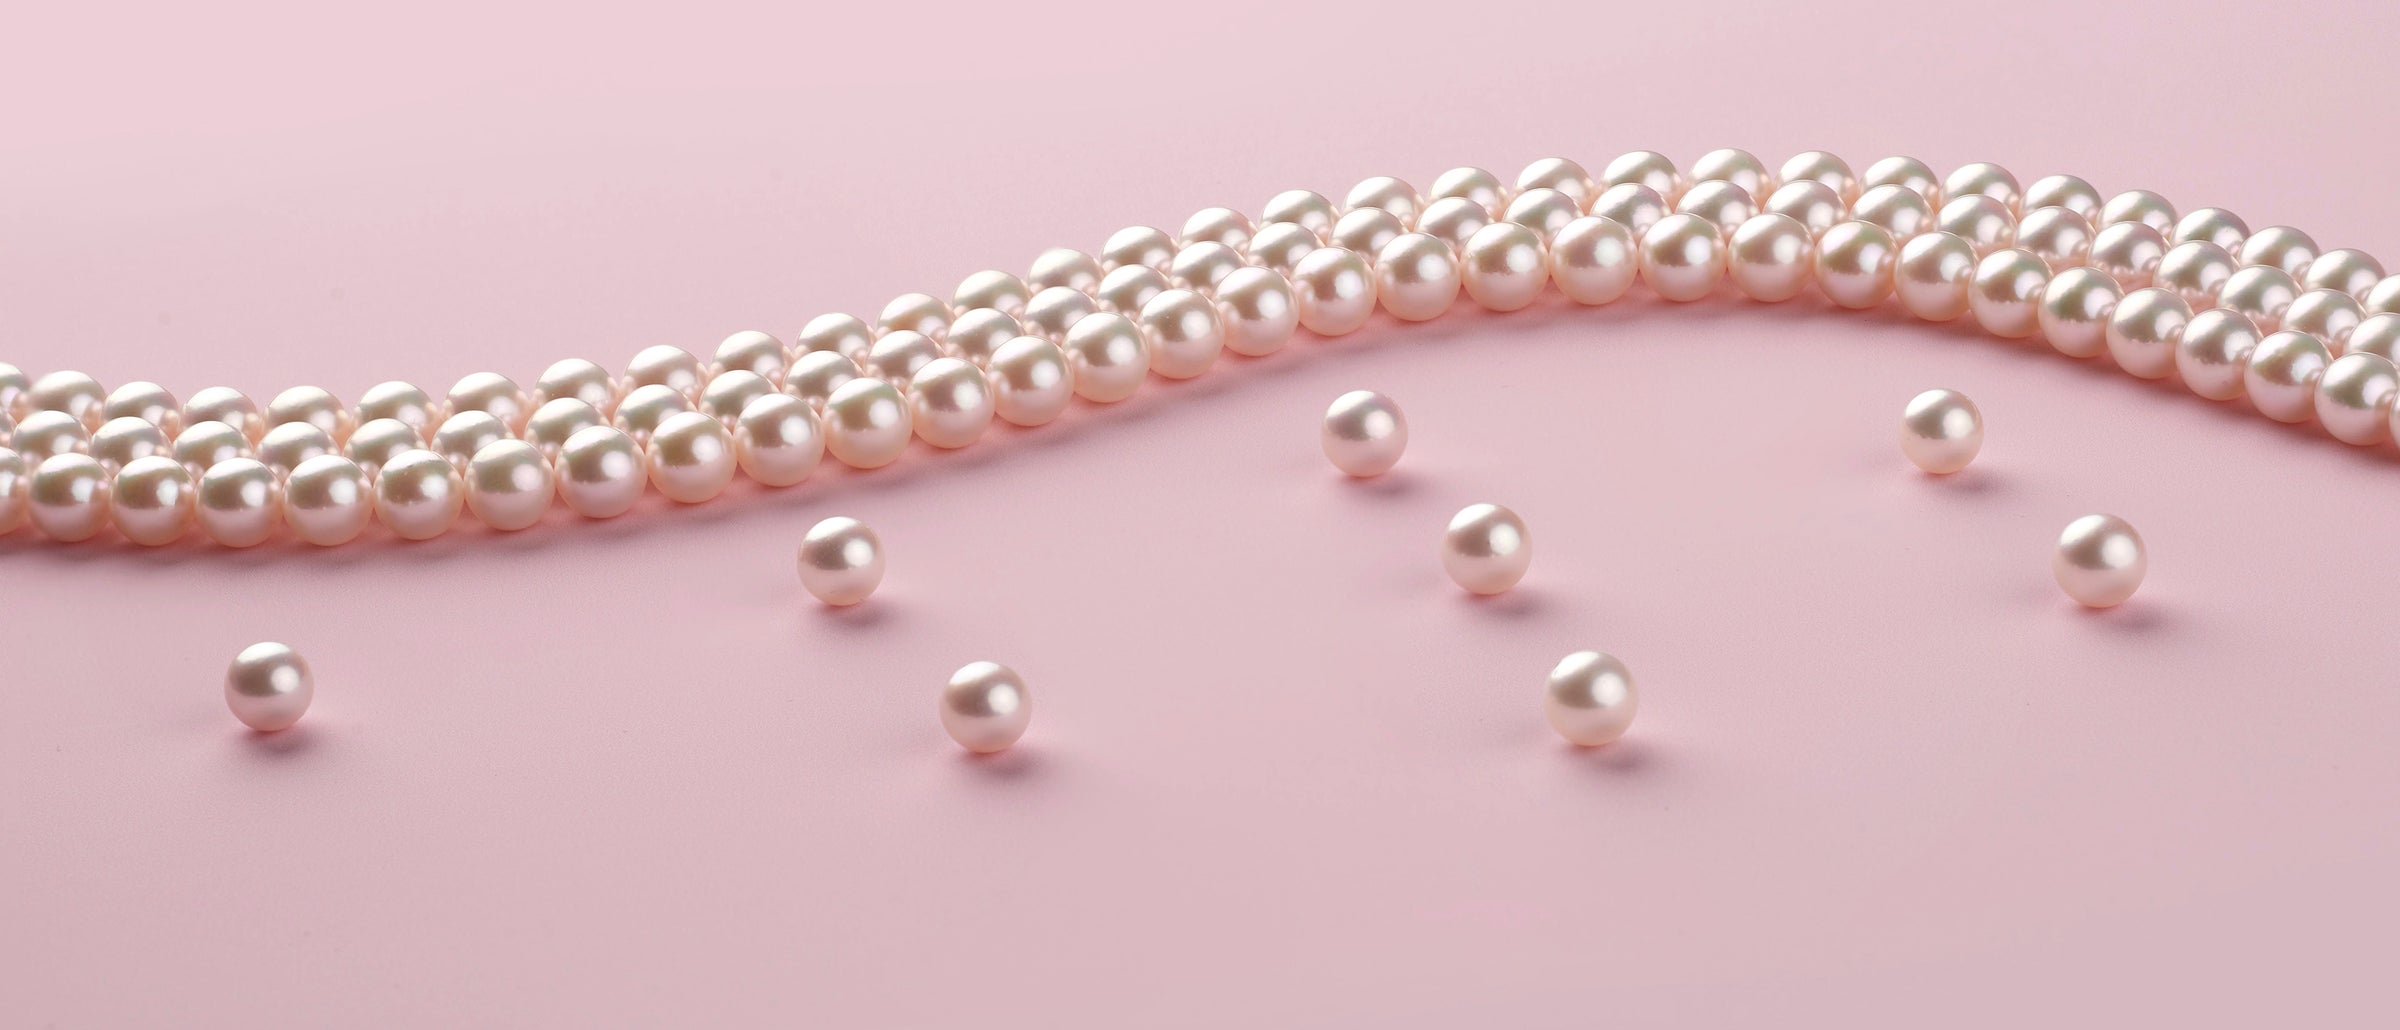 loose akoya pearls and akoya pearls strands on pink